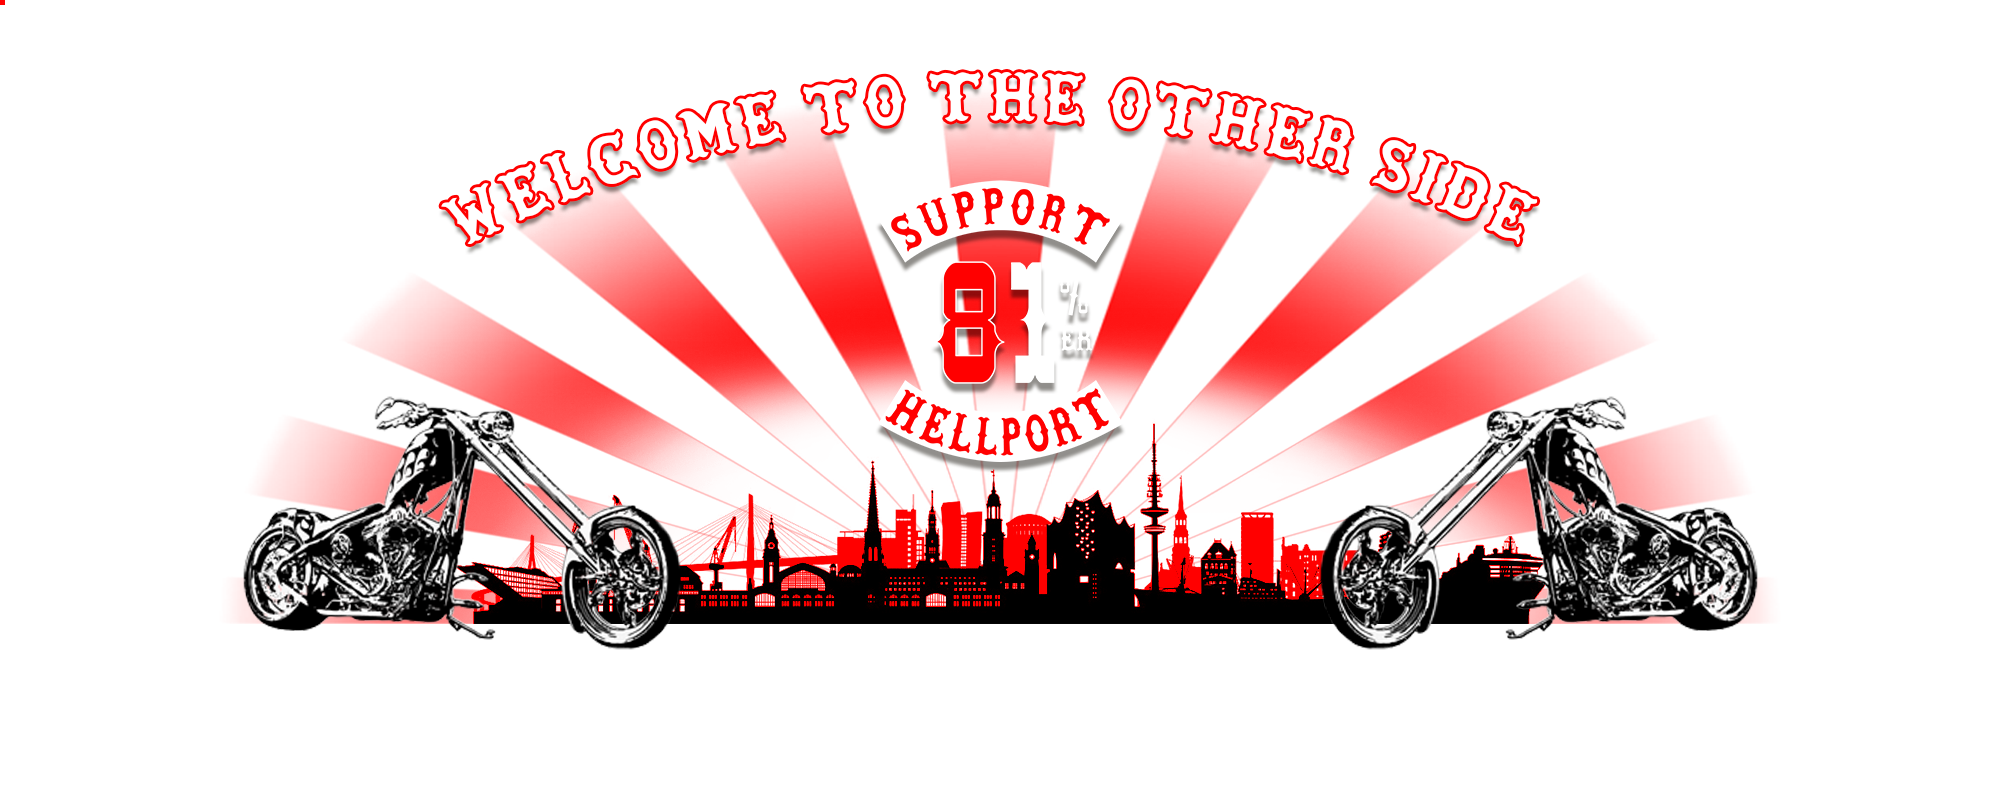 Support 81 Hellport - Auto Duftbaum